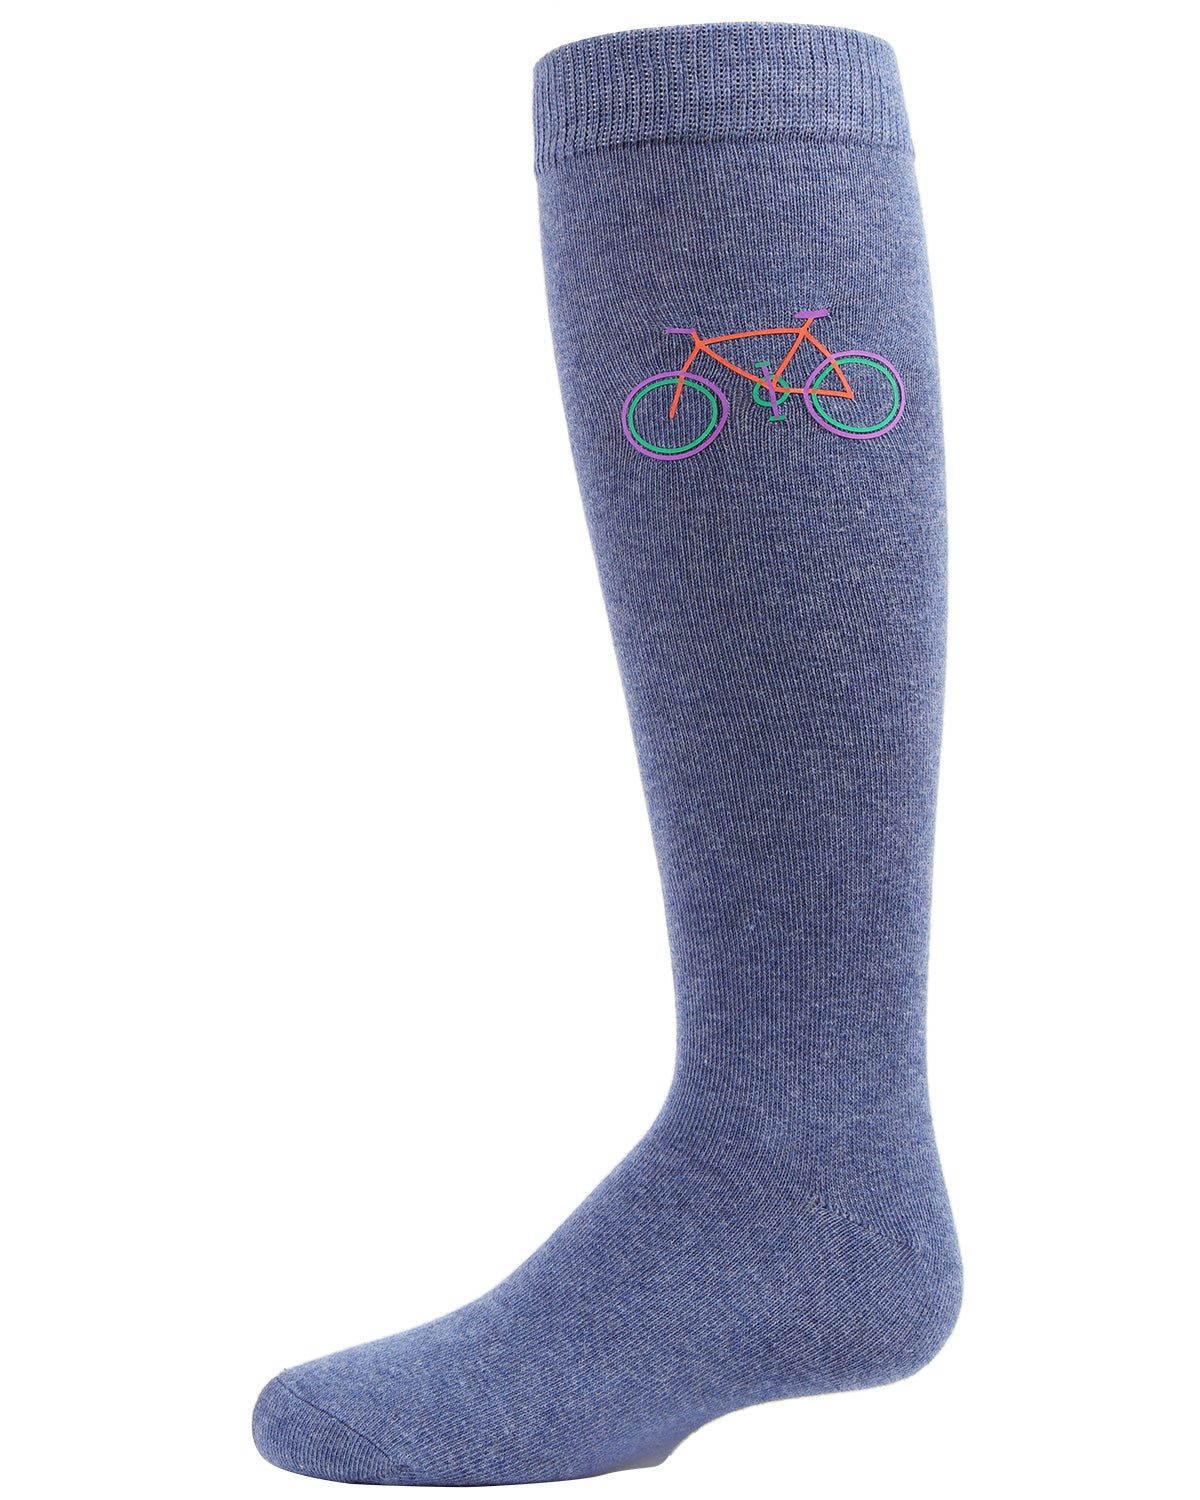 Girls' Embroidered Bicycle Knee-High Socks